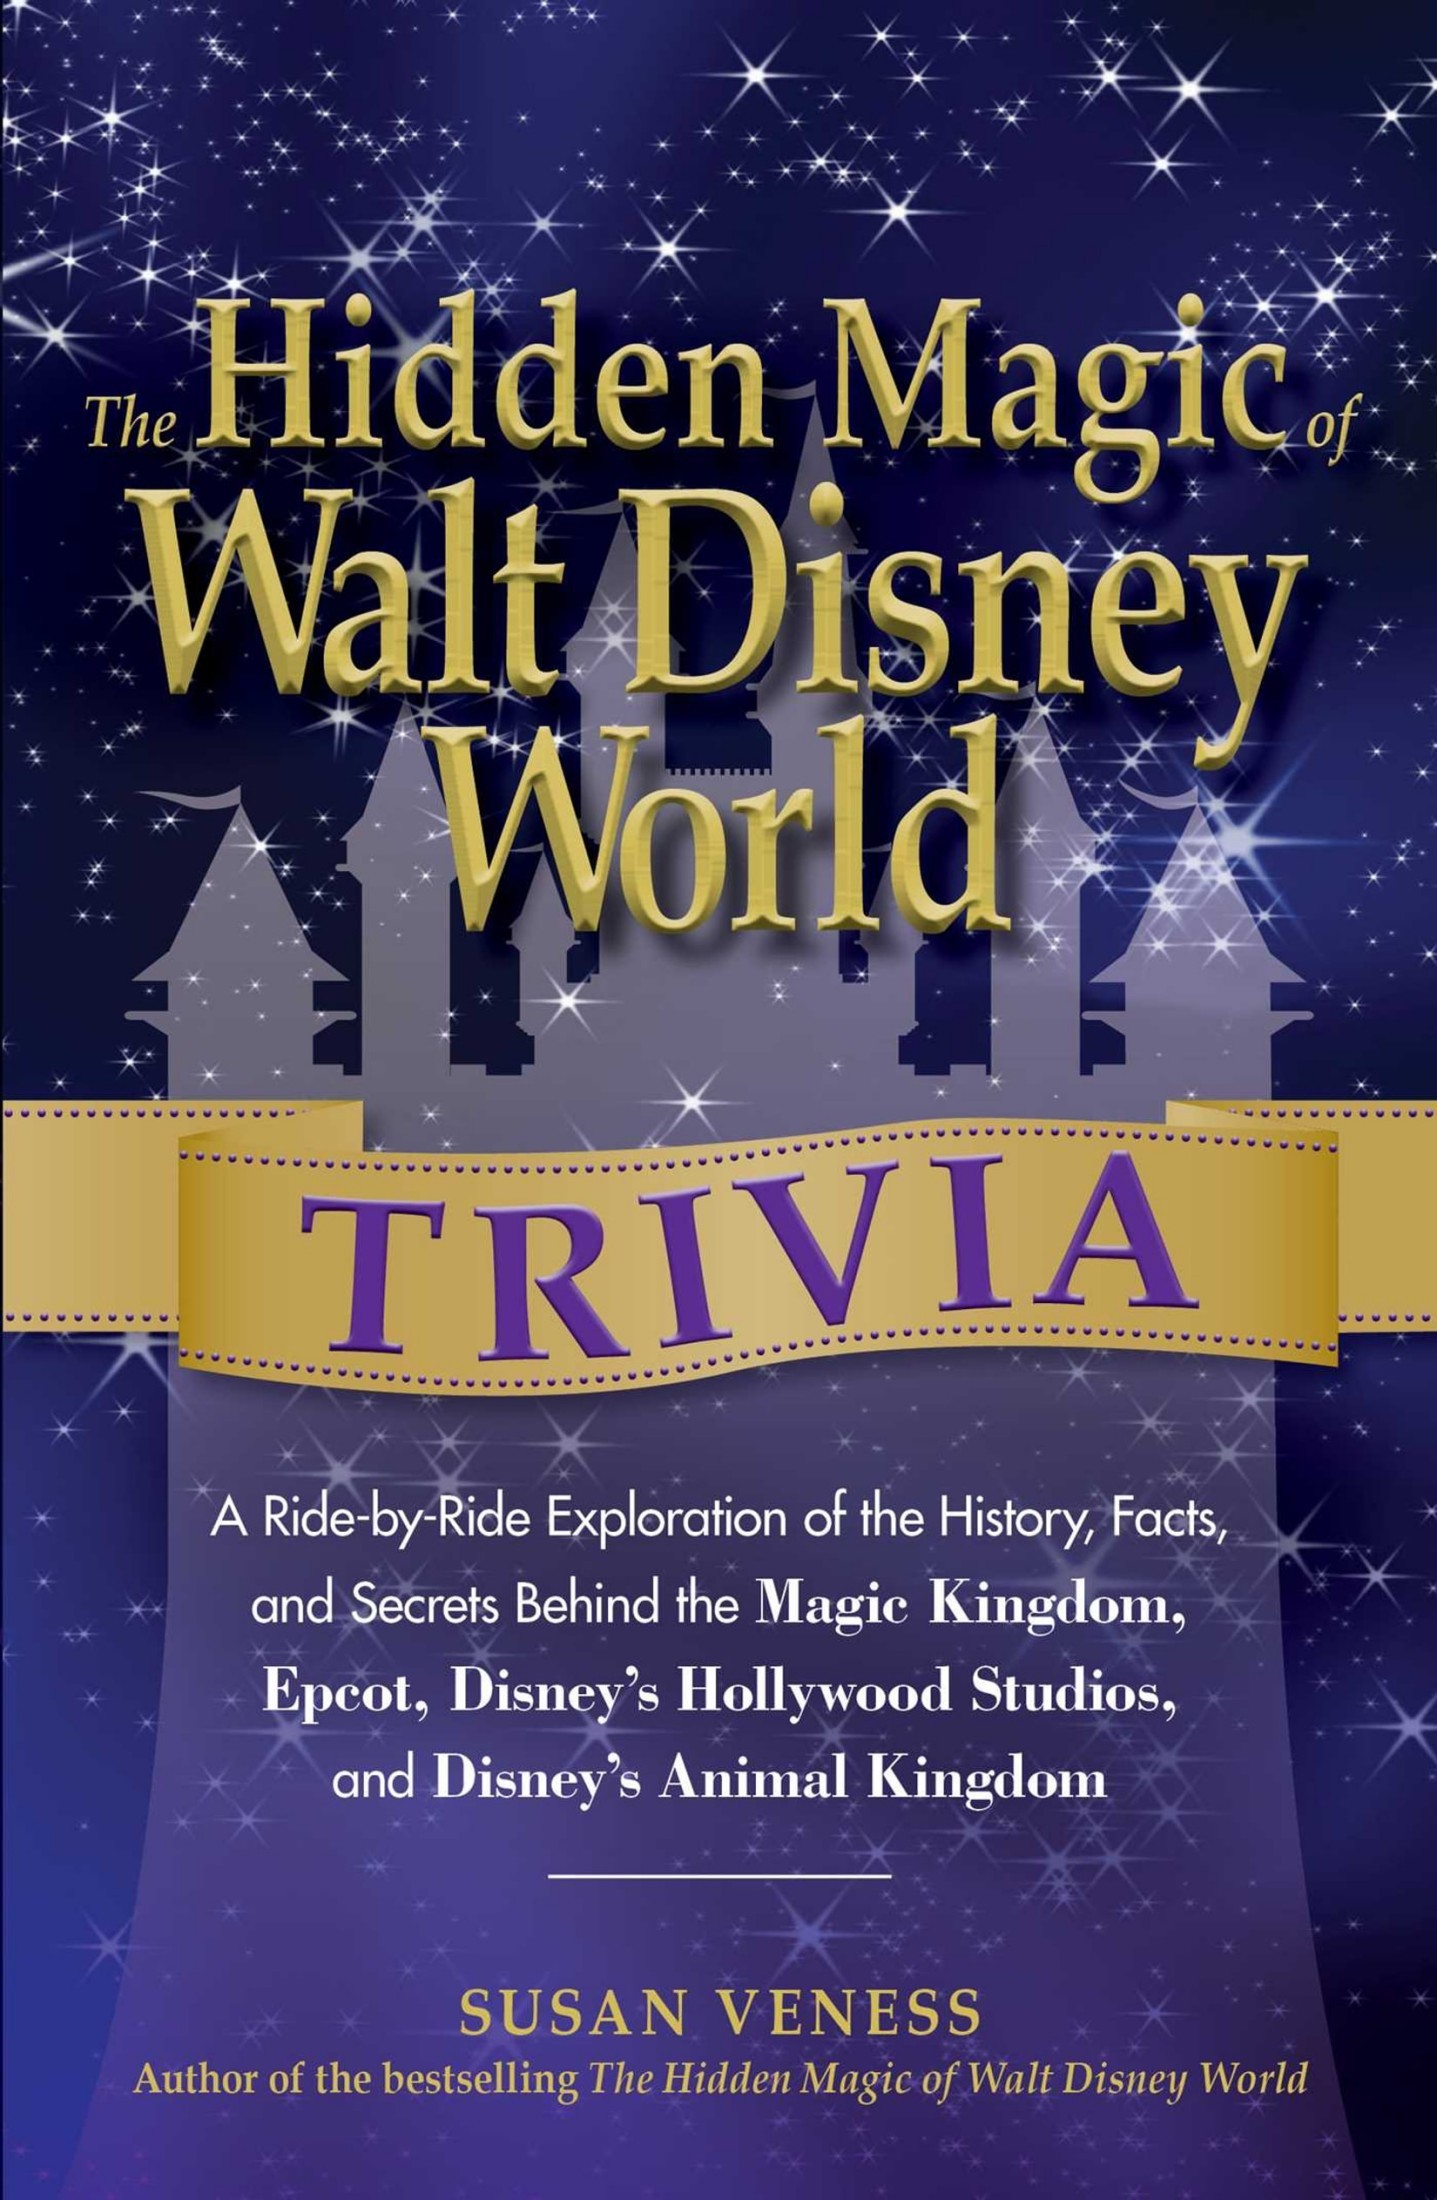 The Hidden Magic of Walt Disney World Trivia